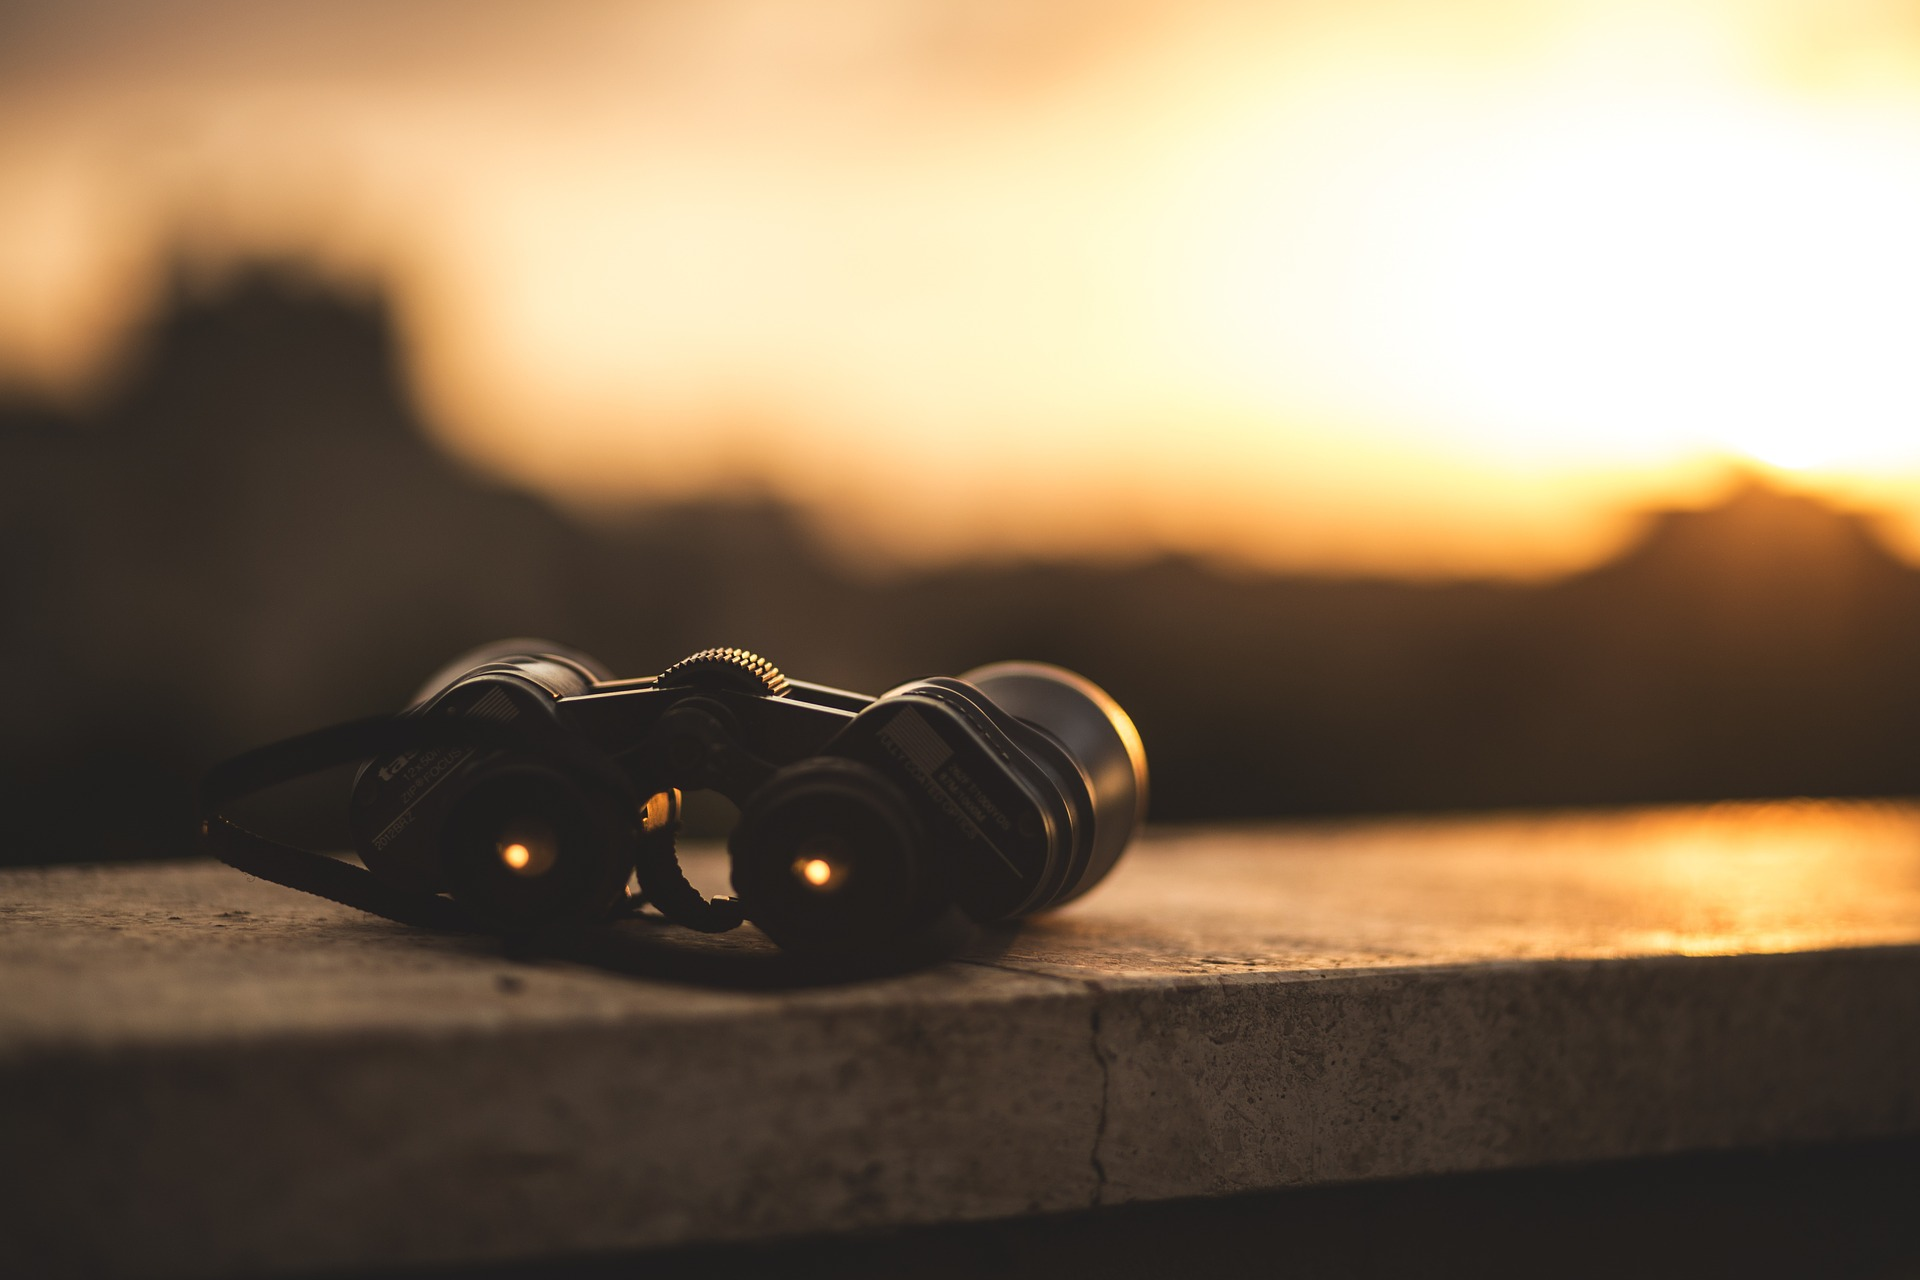 Binoculars on a ledge looking towards a sunset